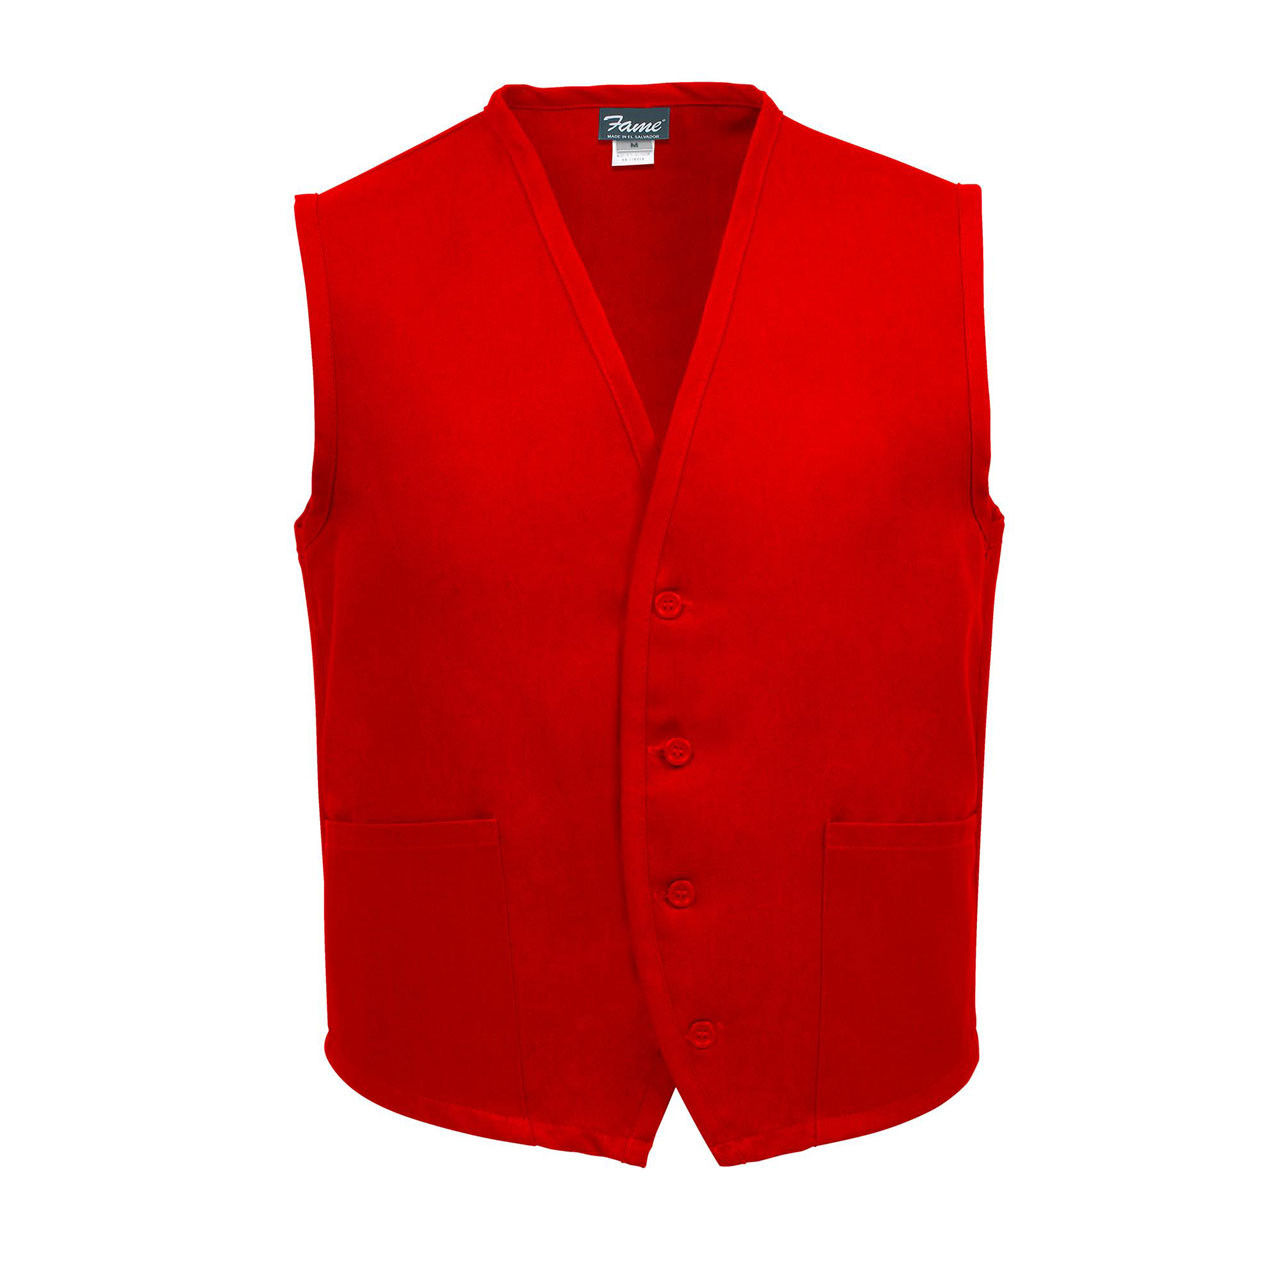 What color is the red vest of the Unisex Uniform Vest?